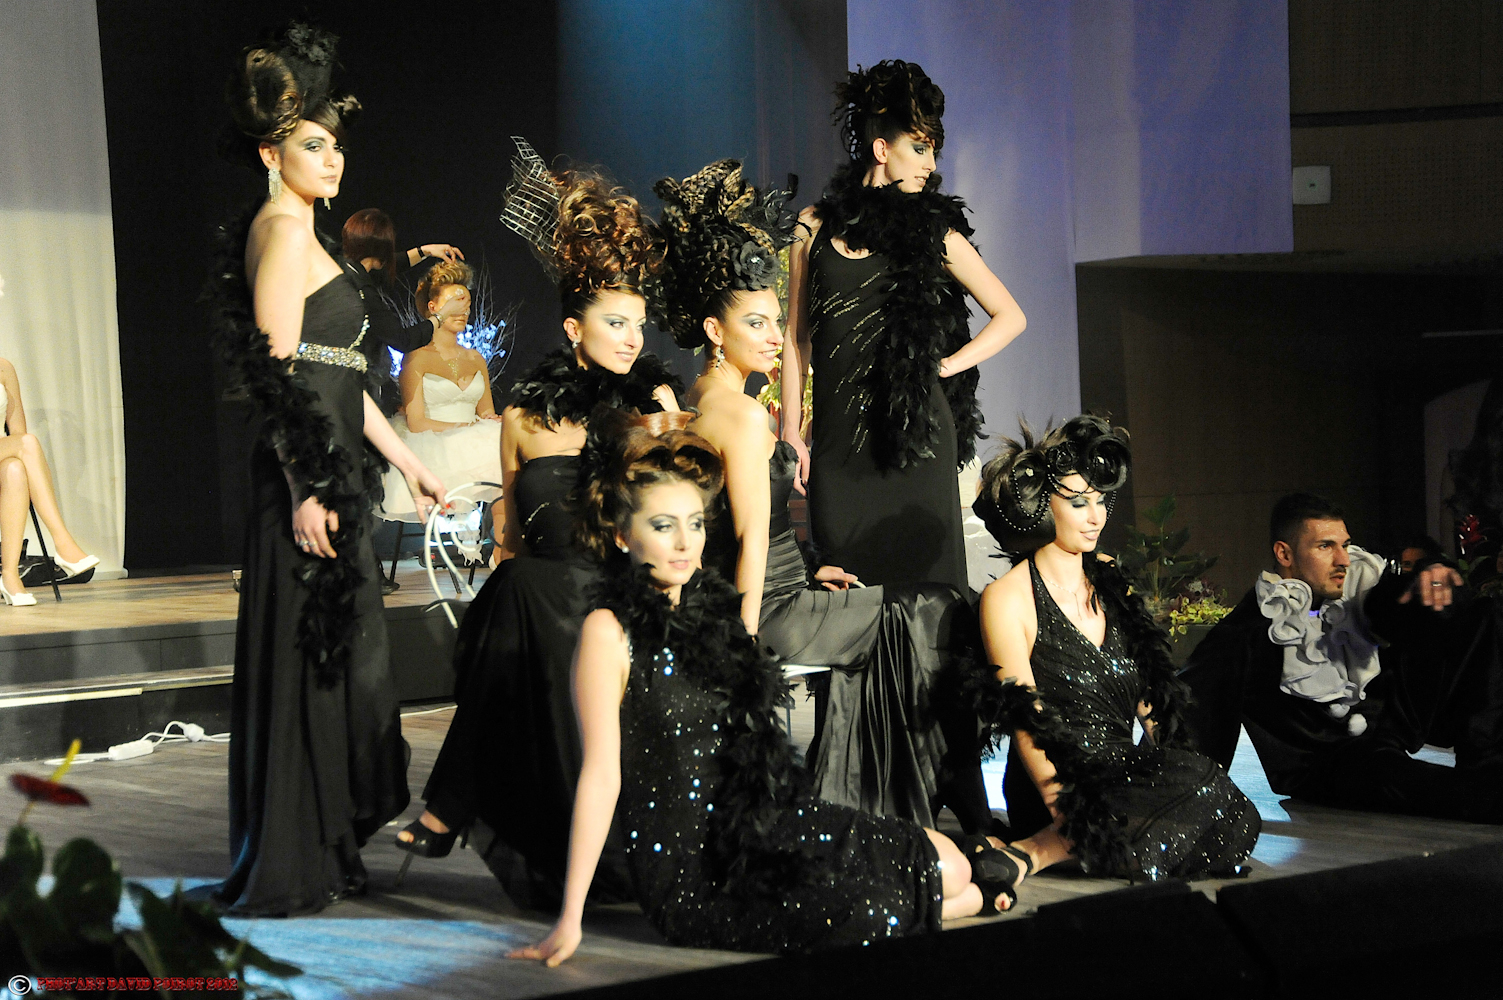 The 2013 Evian's hairdressing festival (France)